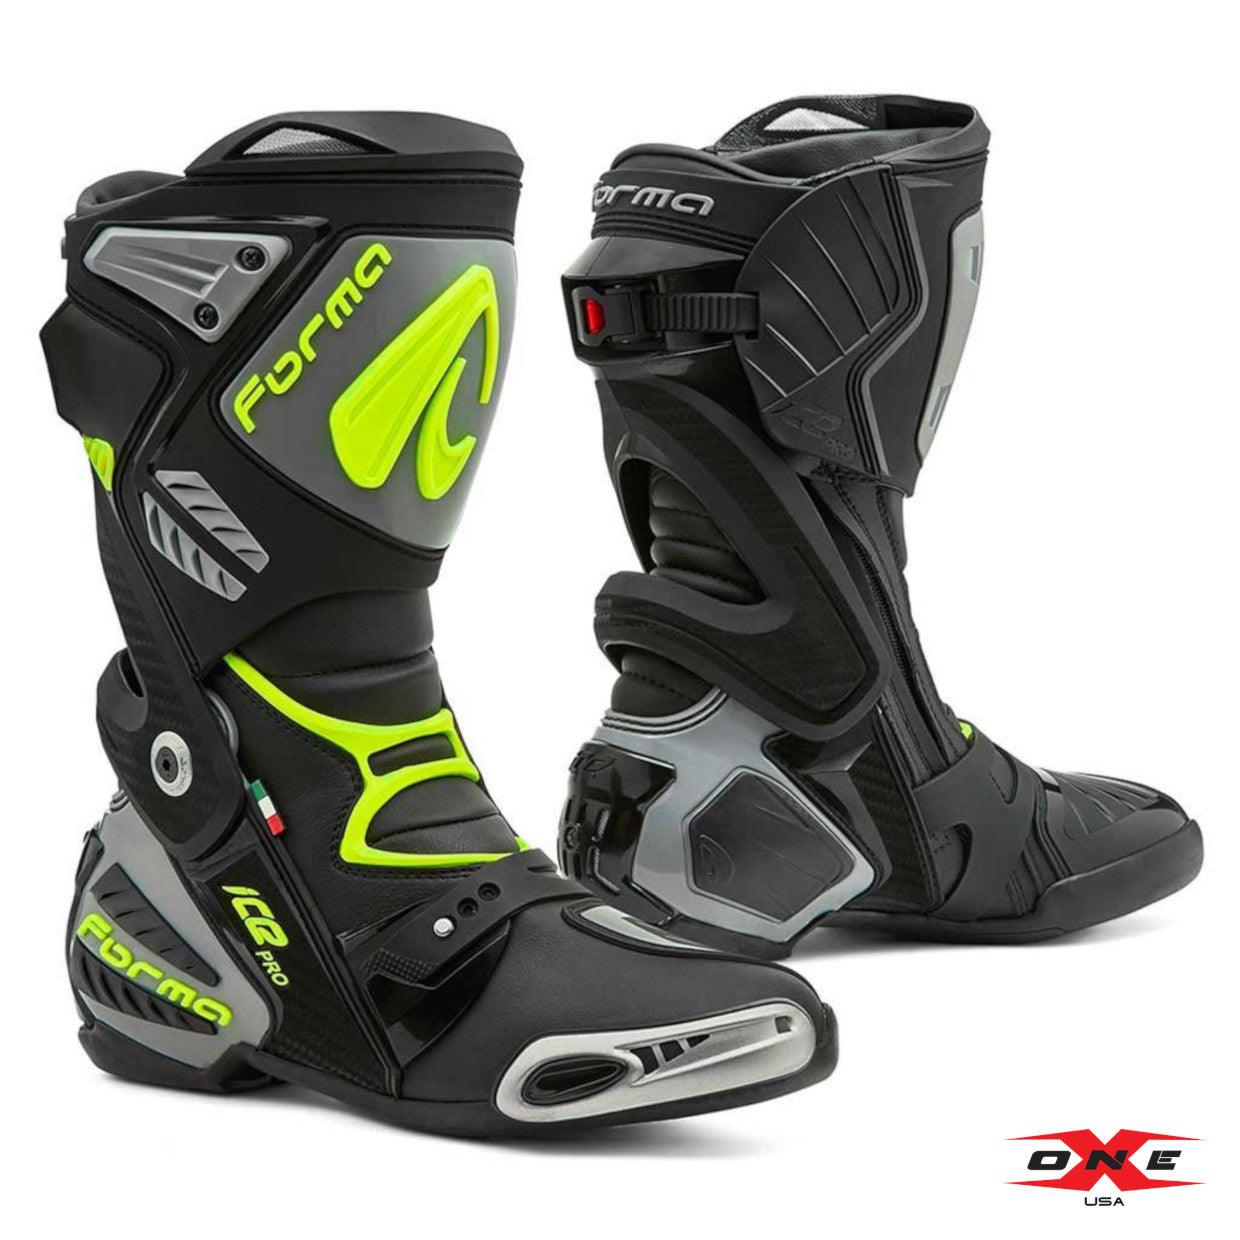 Road Racing Boots - OneX USA